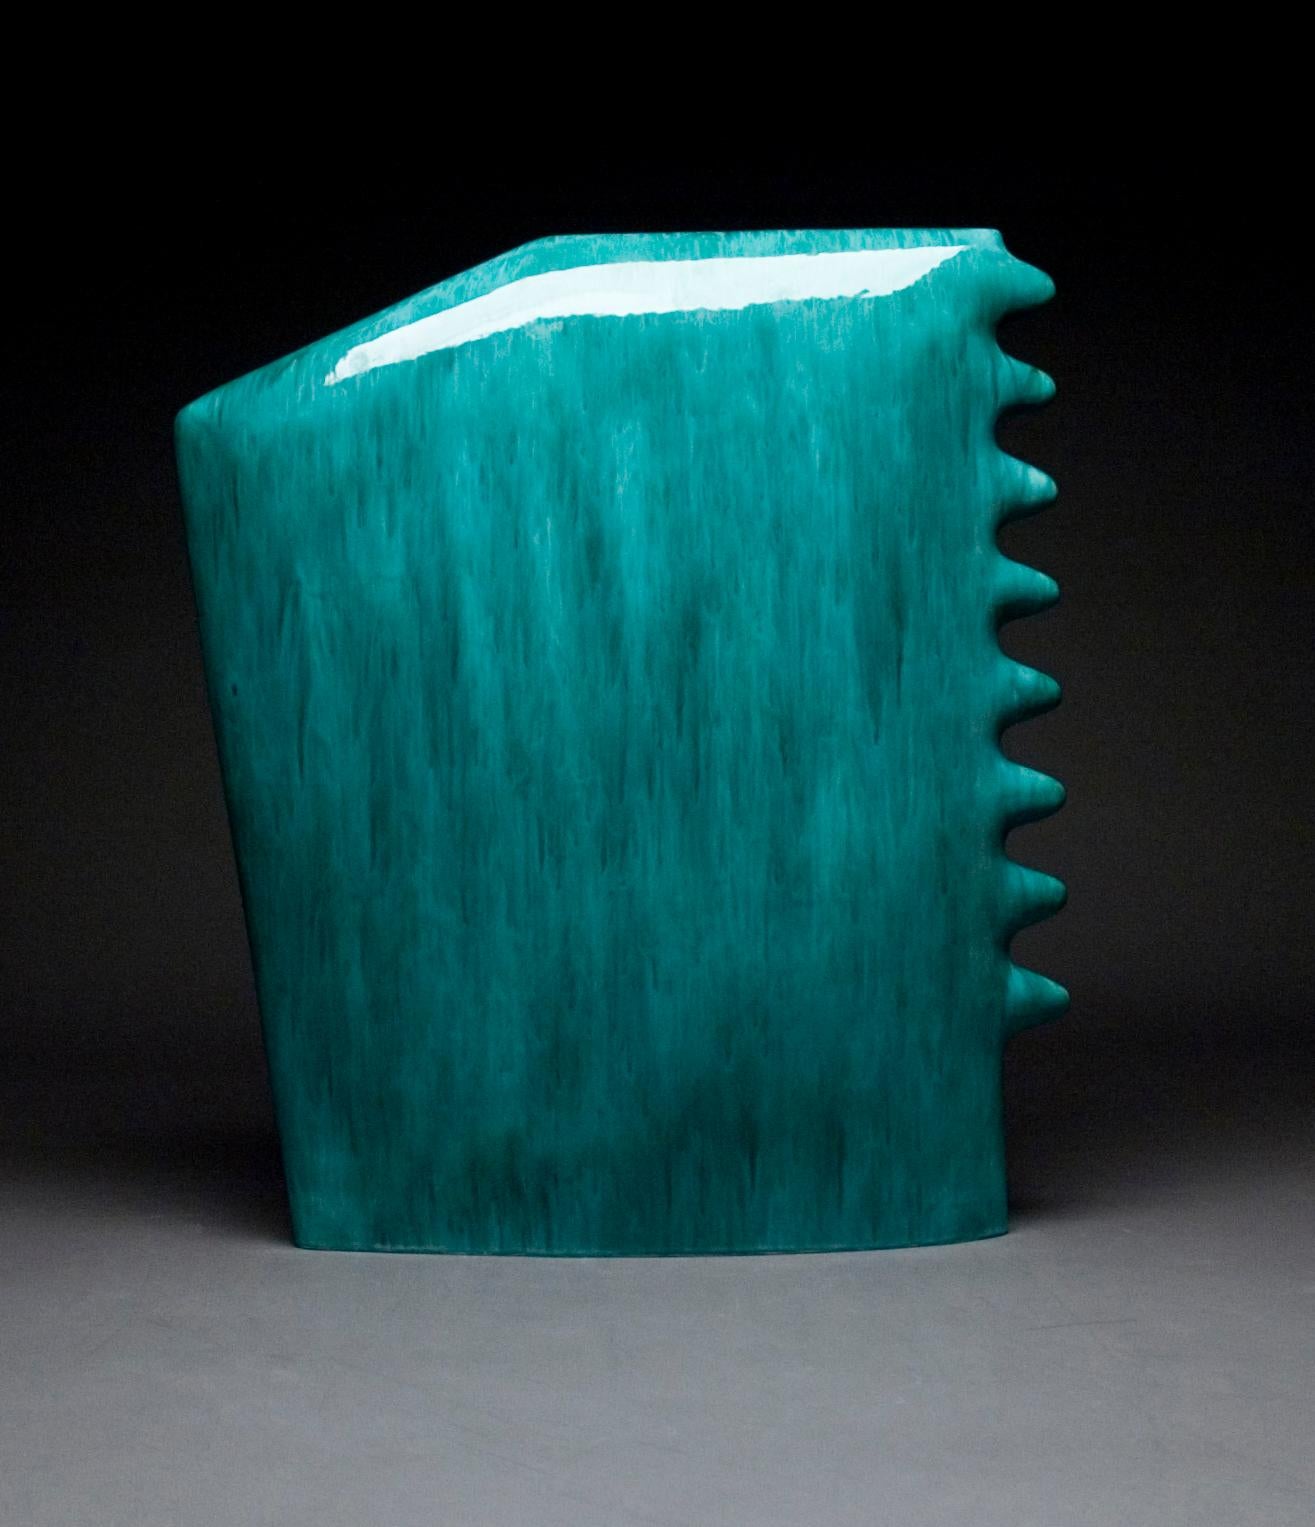 James Marshall Abstract Sculpture - "Blue 270", Minimalist Ceramic Sculpture, Glazed Stoneware, Liminal Form